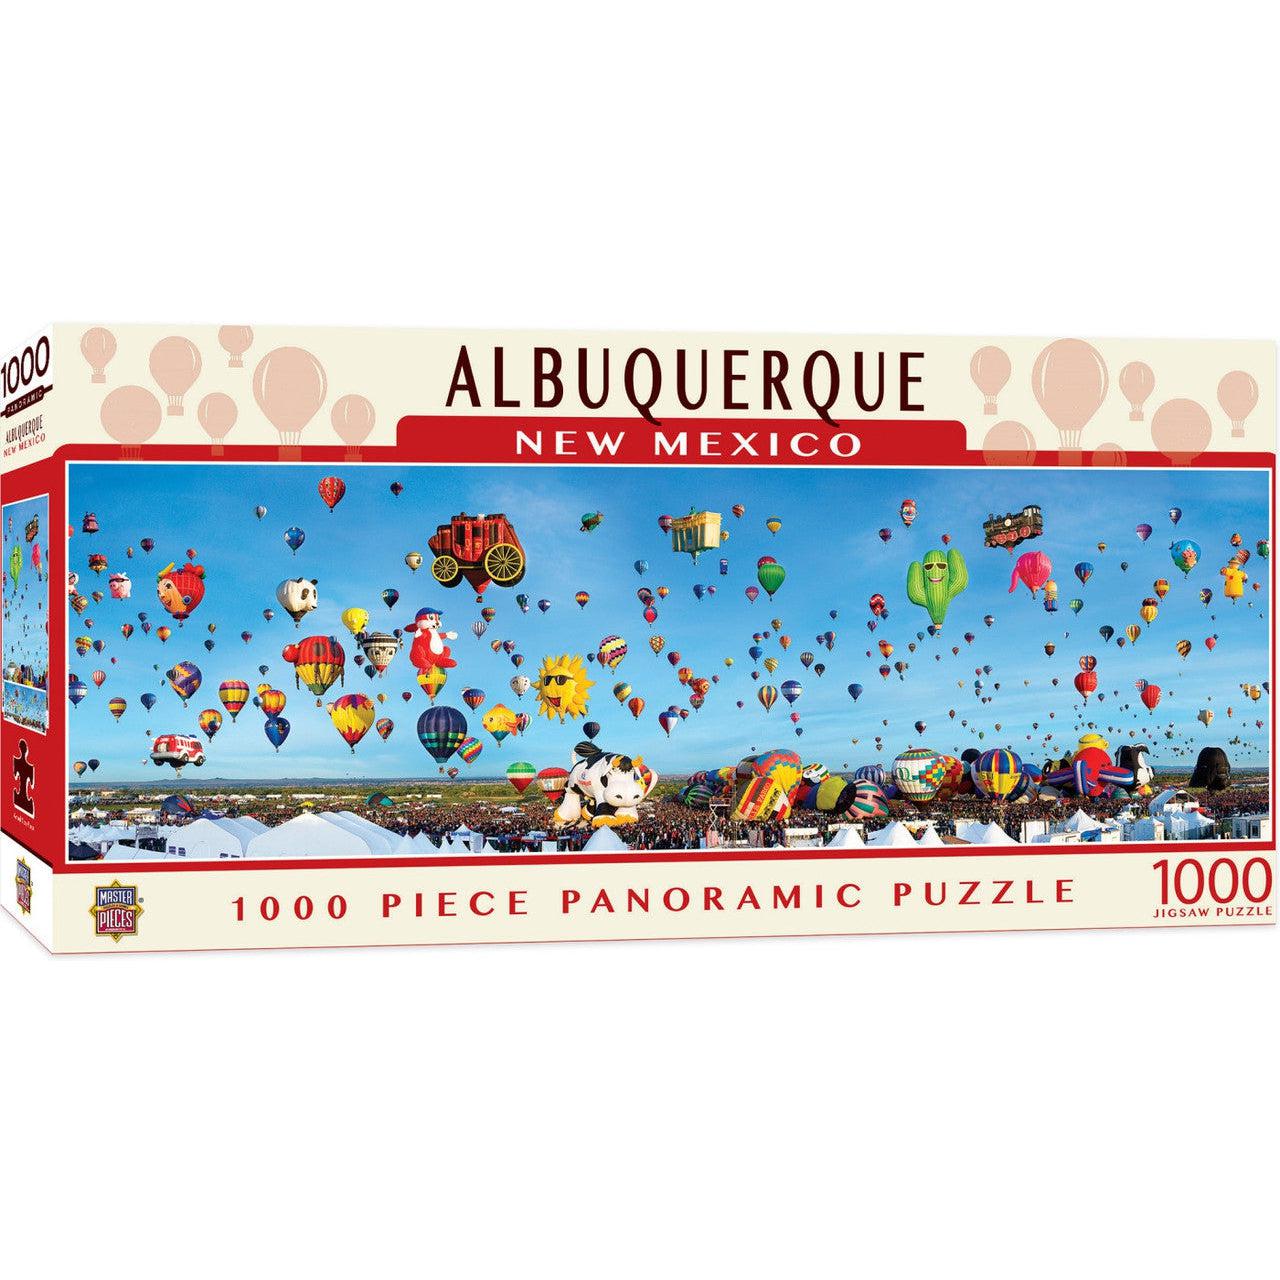 MasterPieces-Blakeway Panoramas - Albuquerque Balloons - 1000 Piece Panoramic Puzzle-71585-Legacy Toys